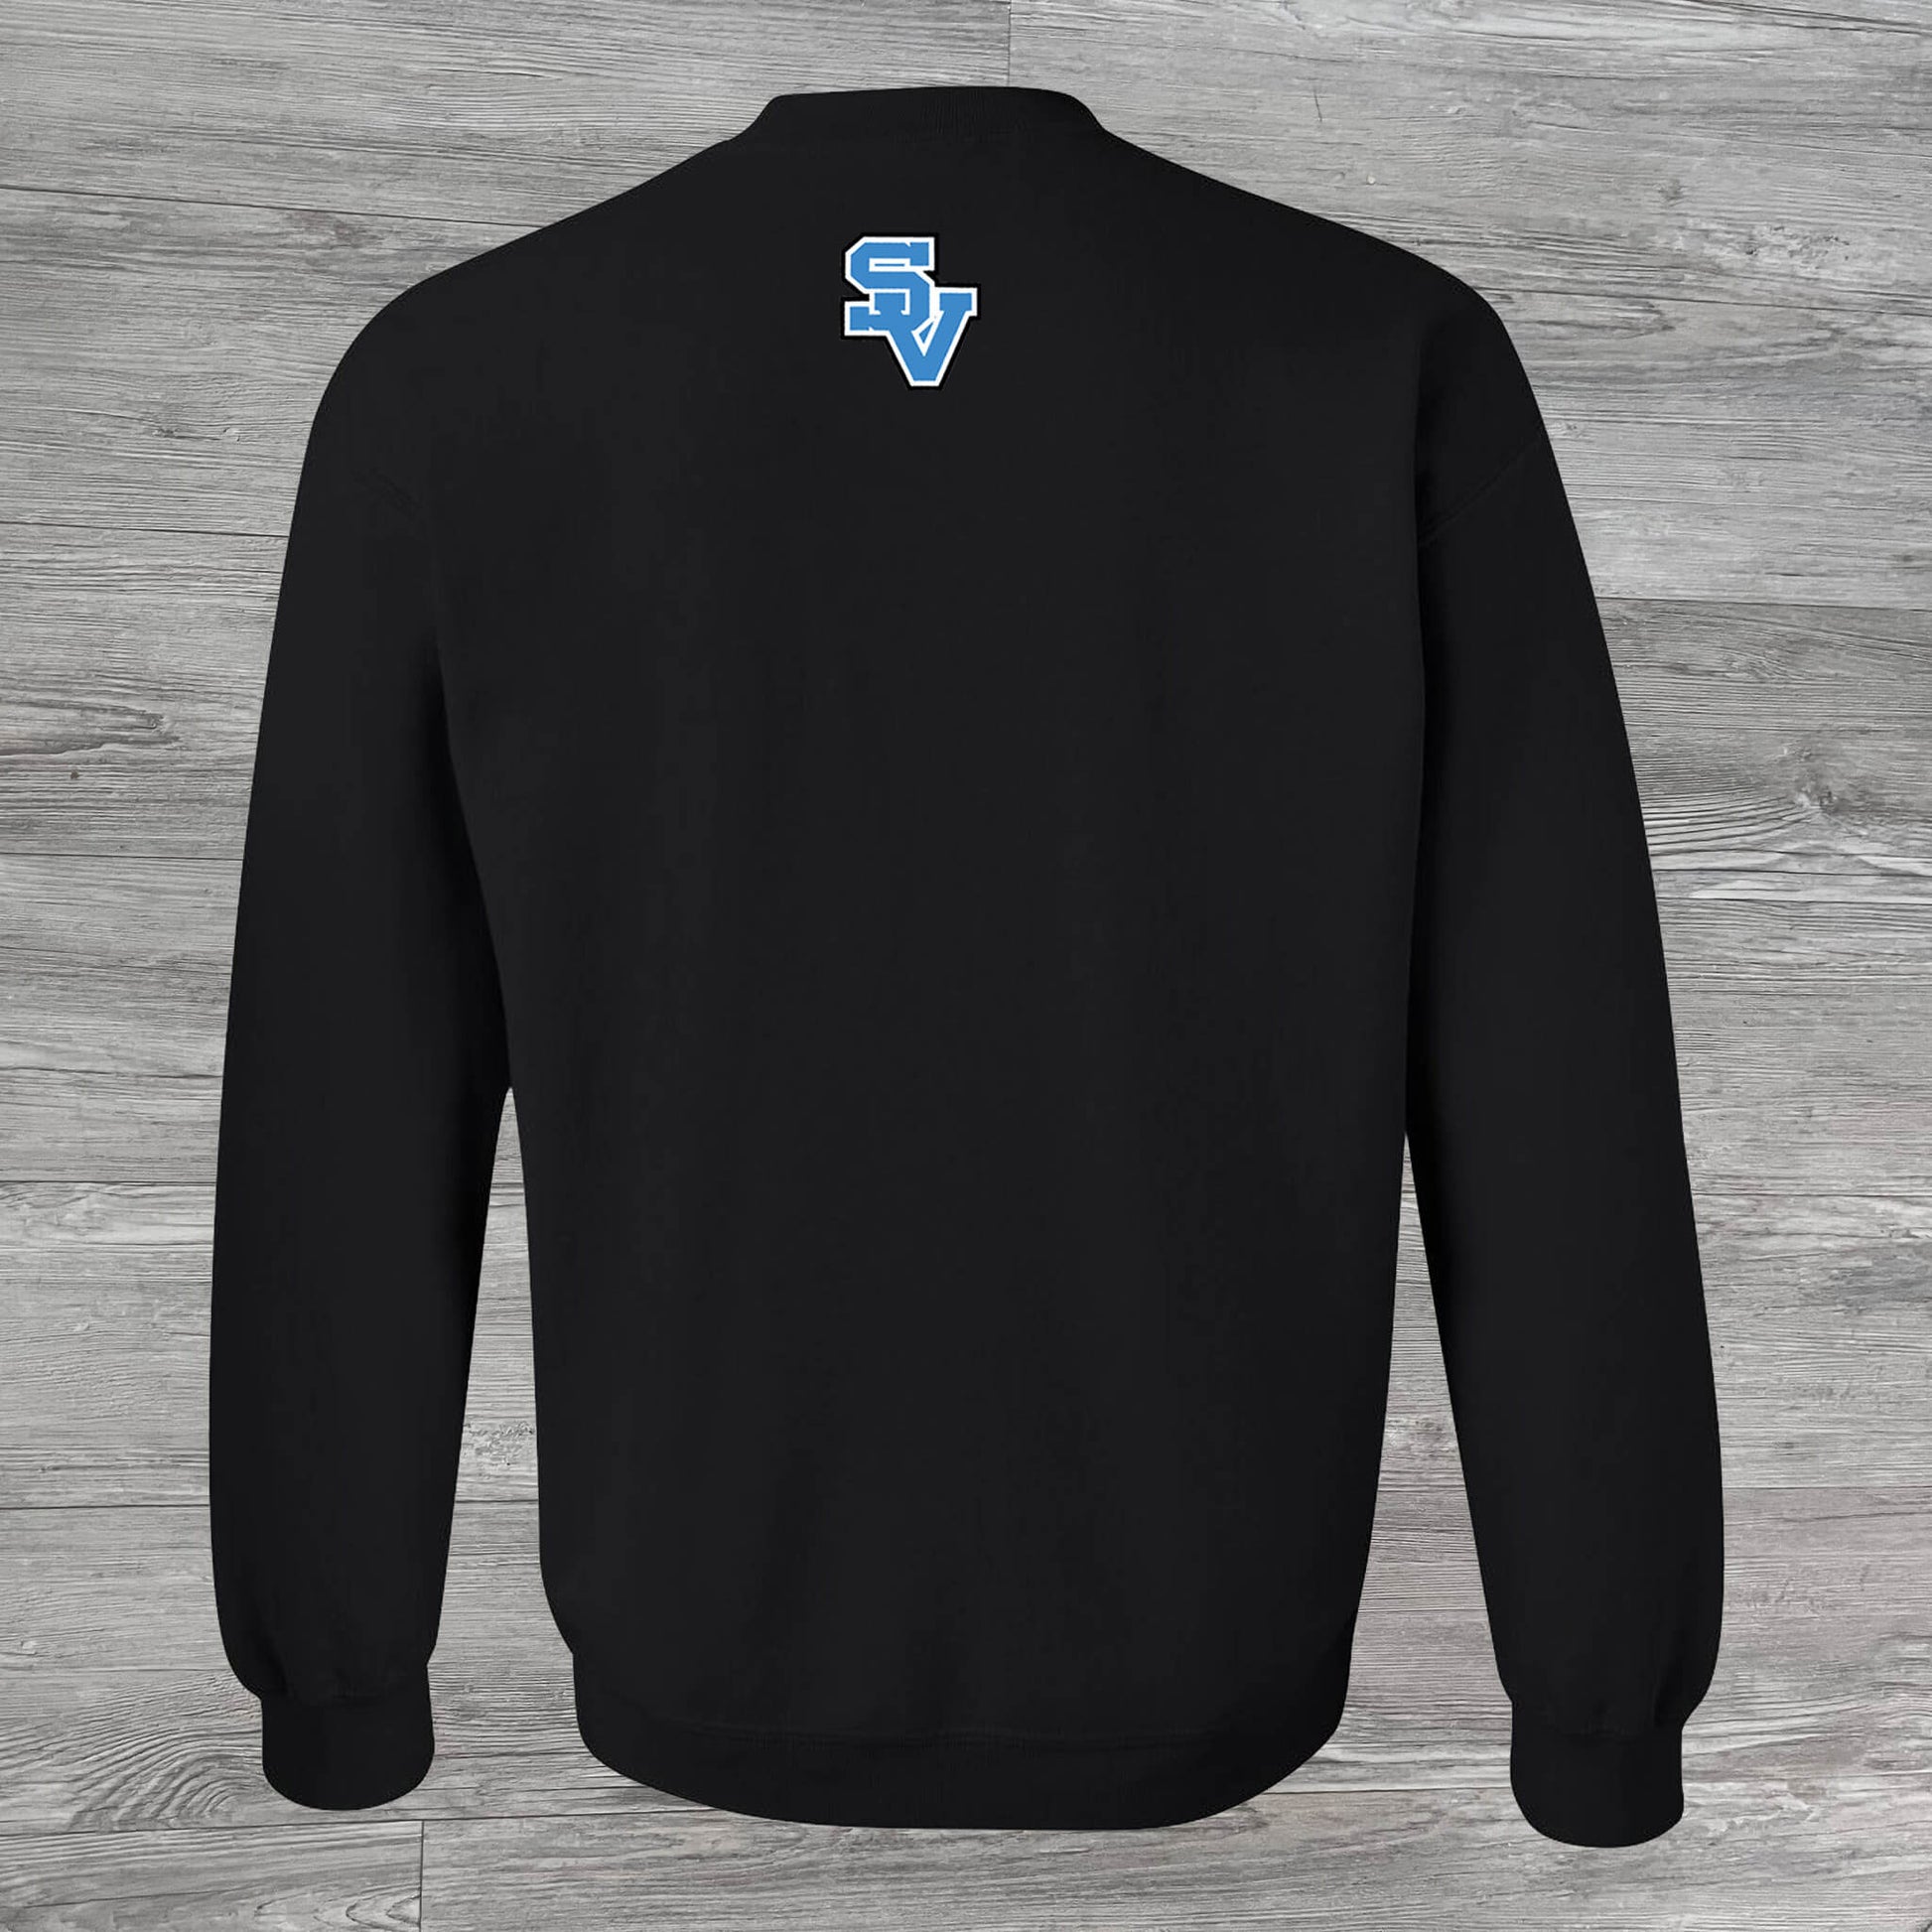 Black Ehrman Crest Middle School Crewneck Sweatshirt back with SV logo